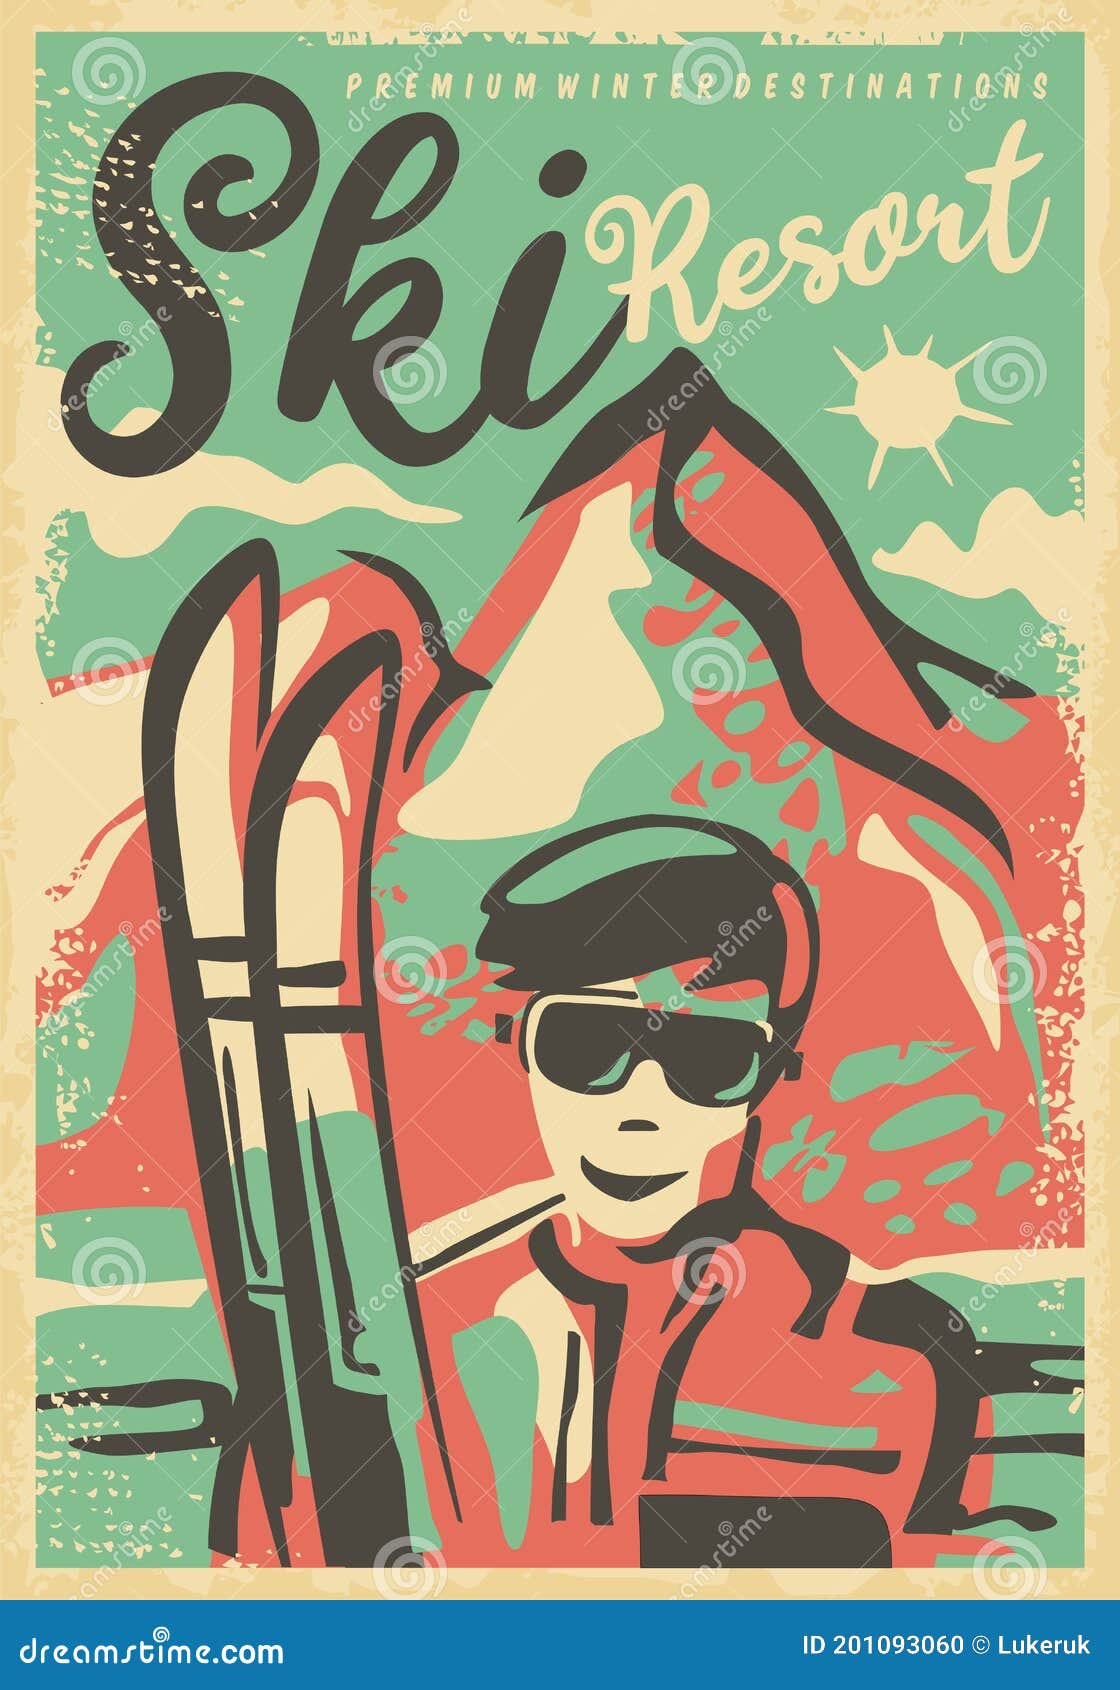 ski resorts retro poster  template